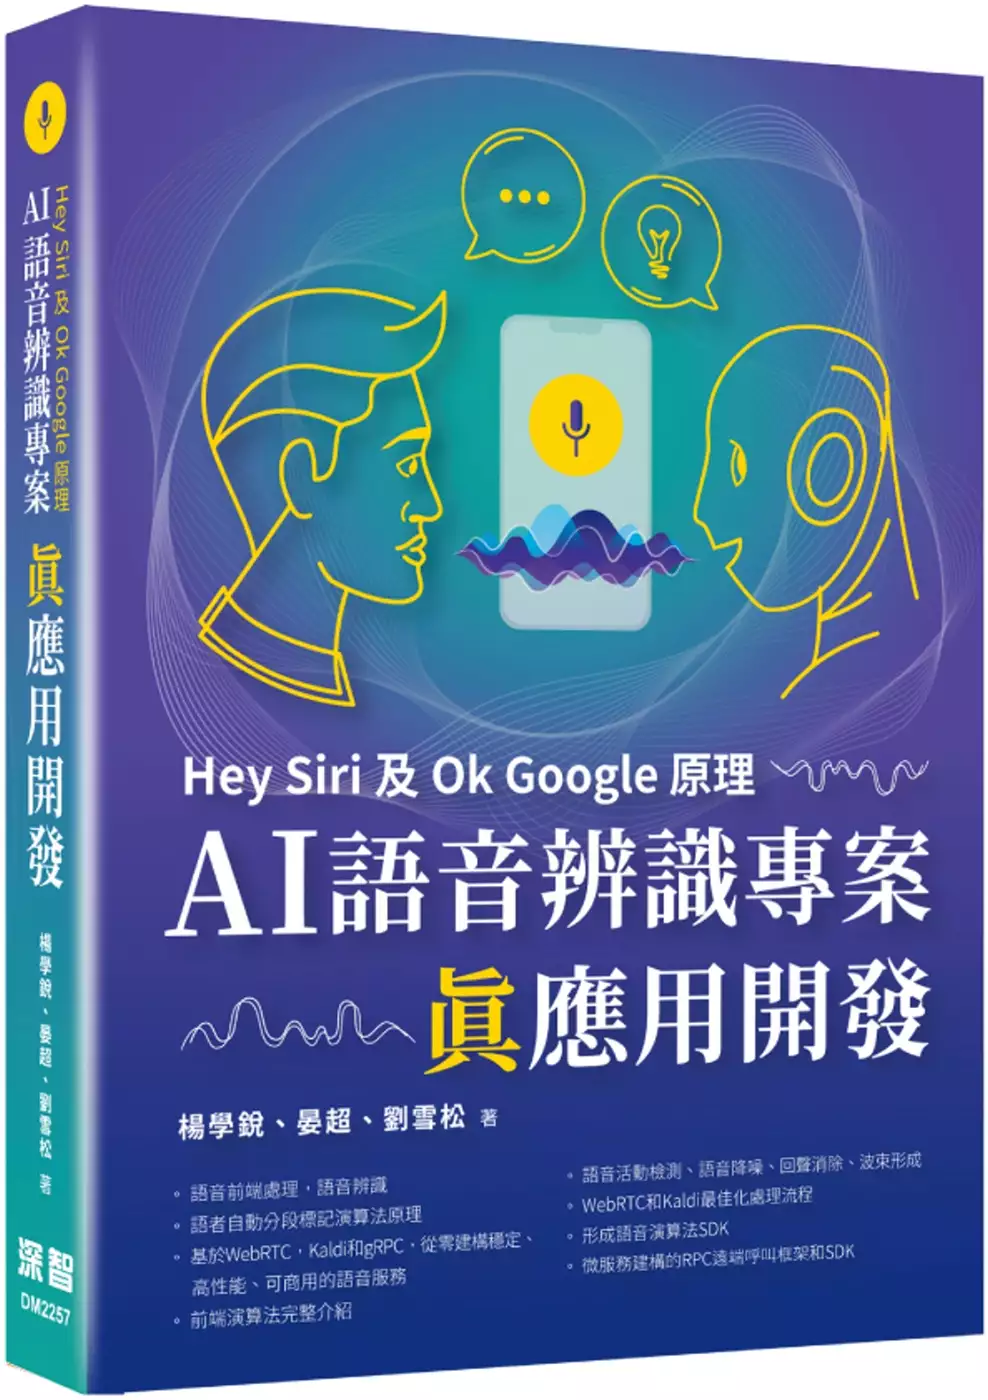 google 翻譯的問題，包括PTT、Dcard、Mobile01找圖書和論文來找解法和答案更準確安心 